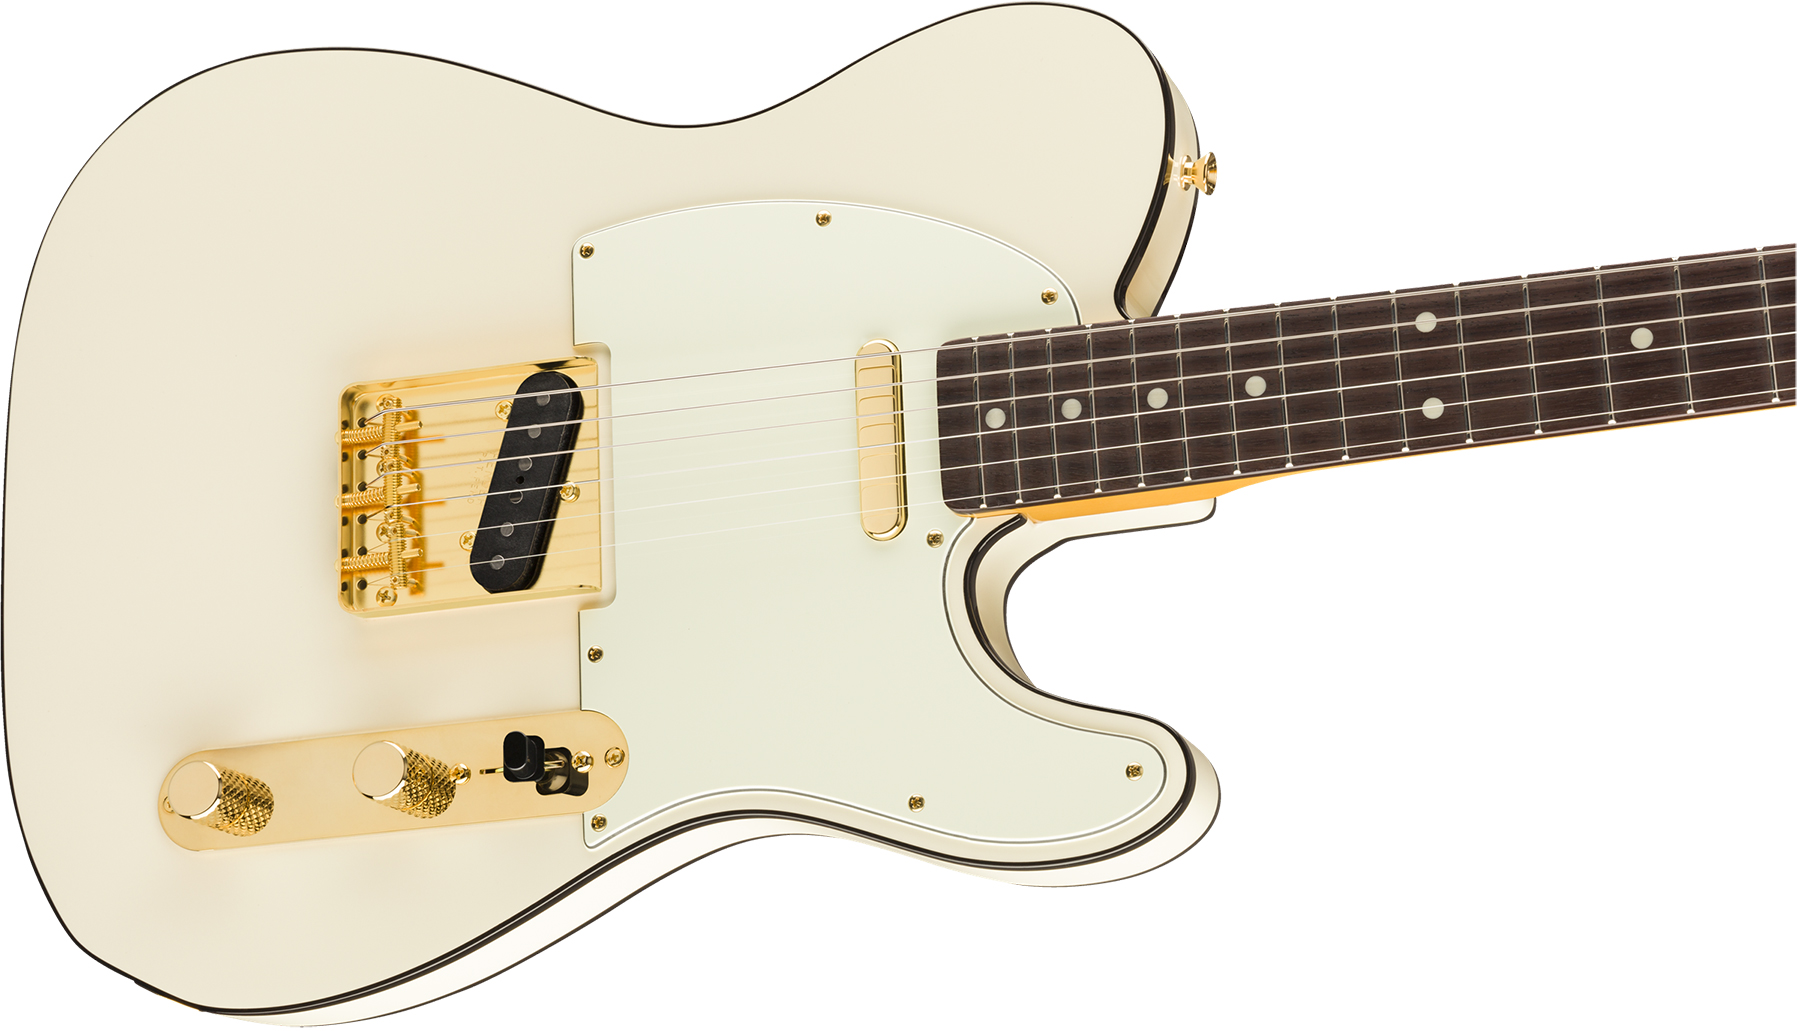 Fender Tele Daybreak Ltd 2019 Japon Gh Rw - Olympic White - Televorm elektrische gitaar - Variation 2